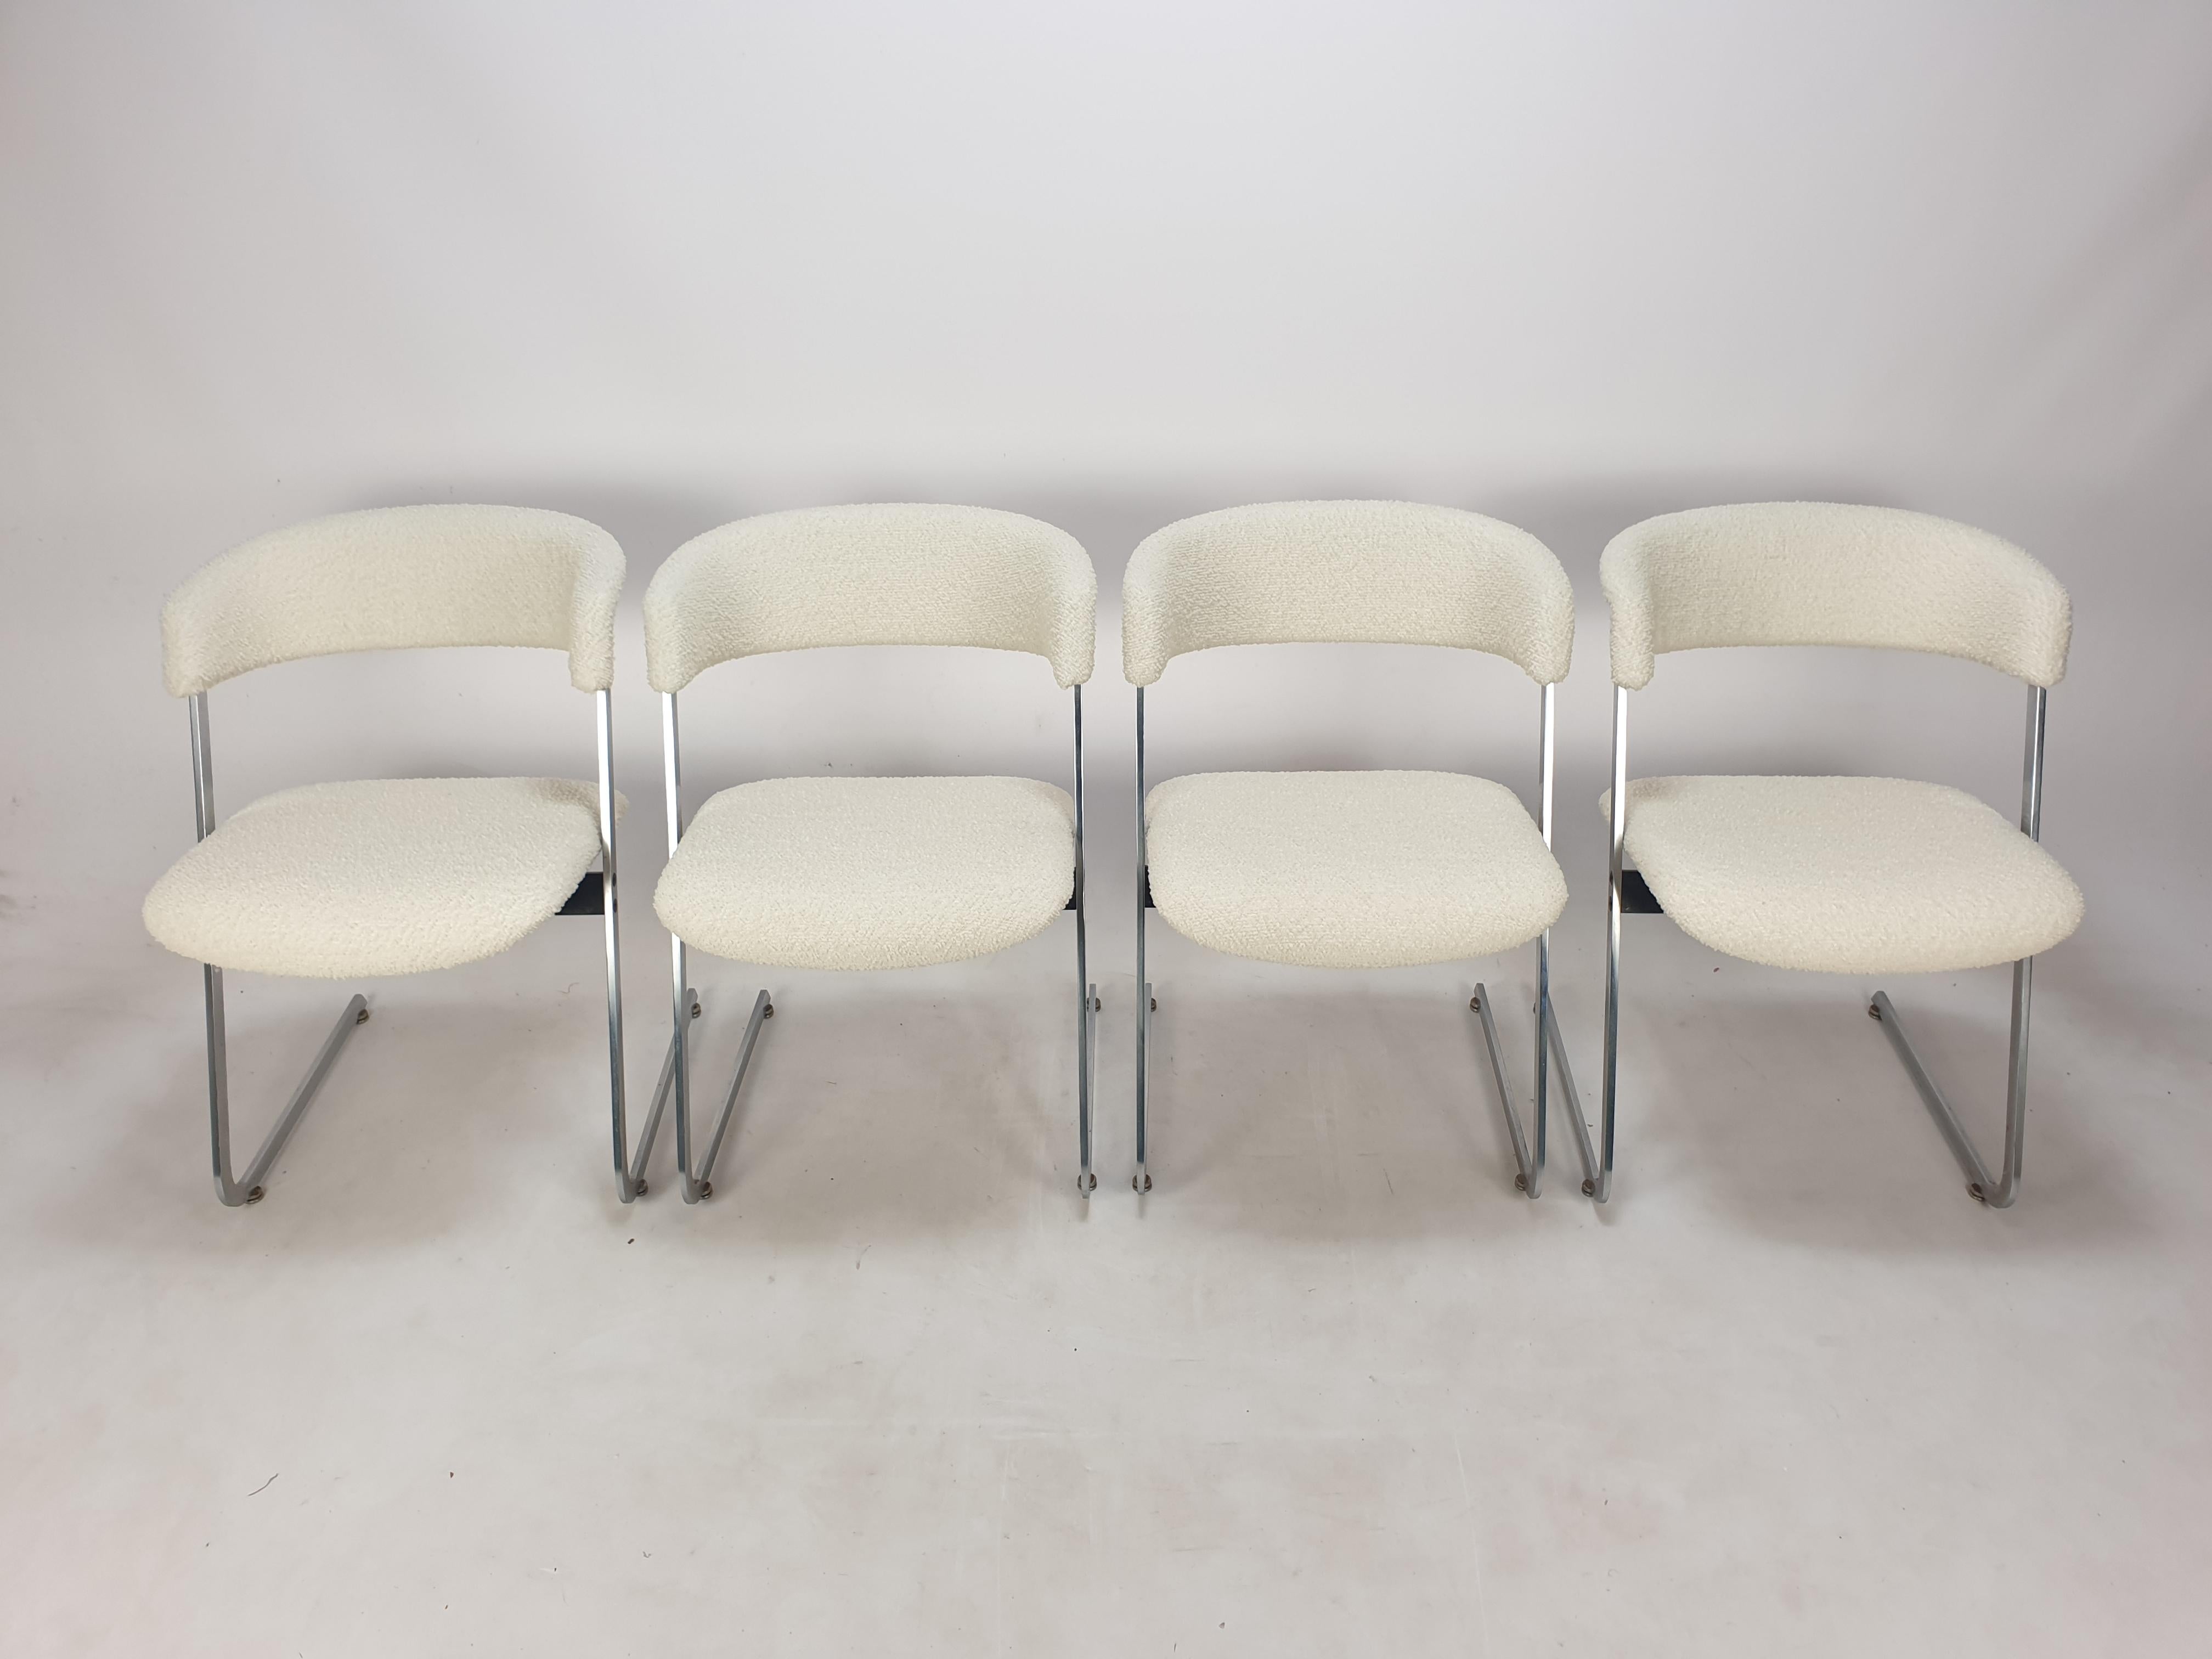 Late 20th Century Set of 4 Italian Chairs, 1970's